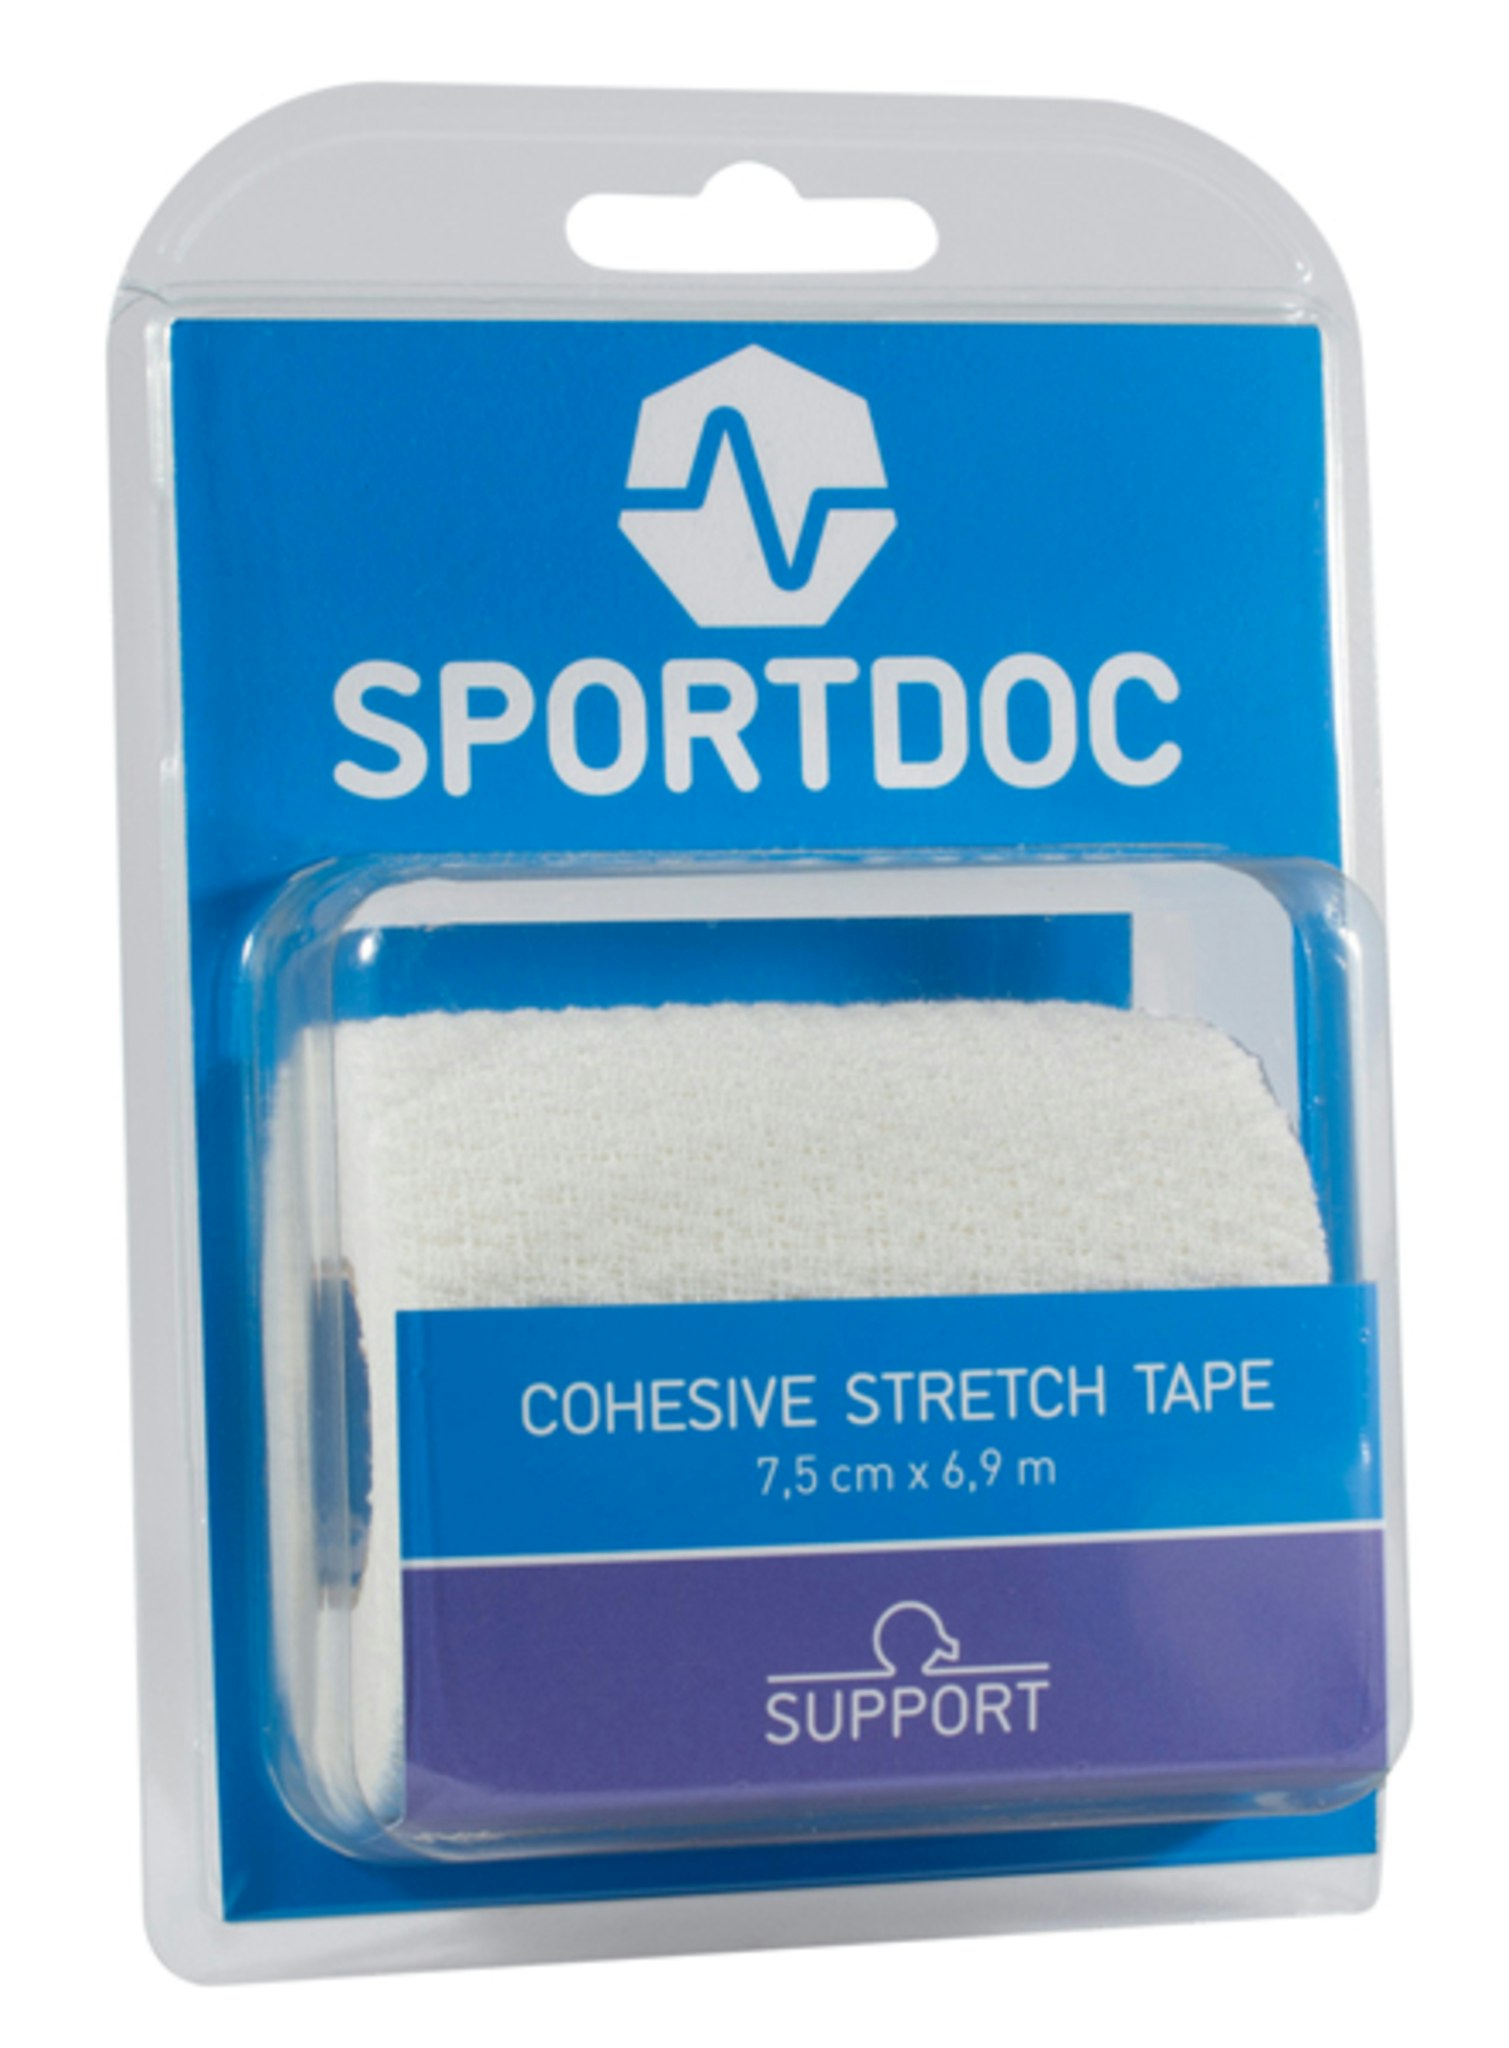 SportDoc Cohesive Stretch Tape 7.5 cm x 6.9 m